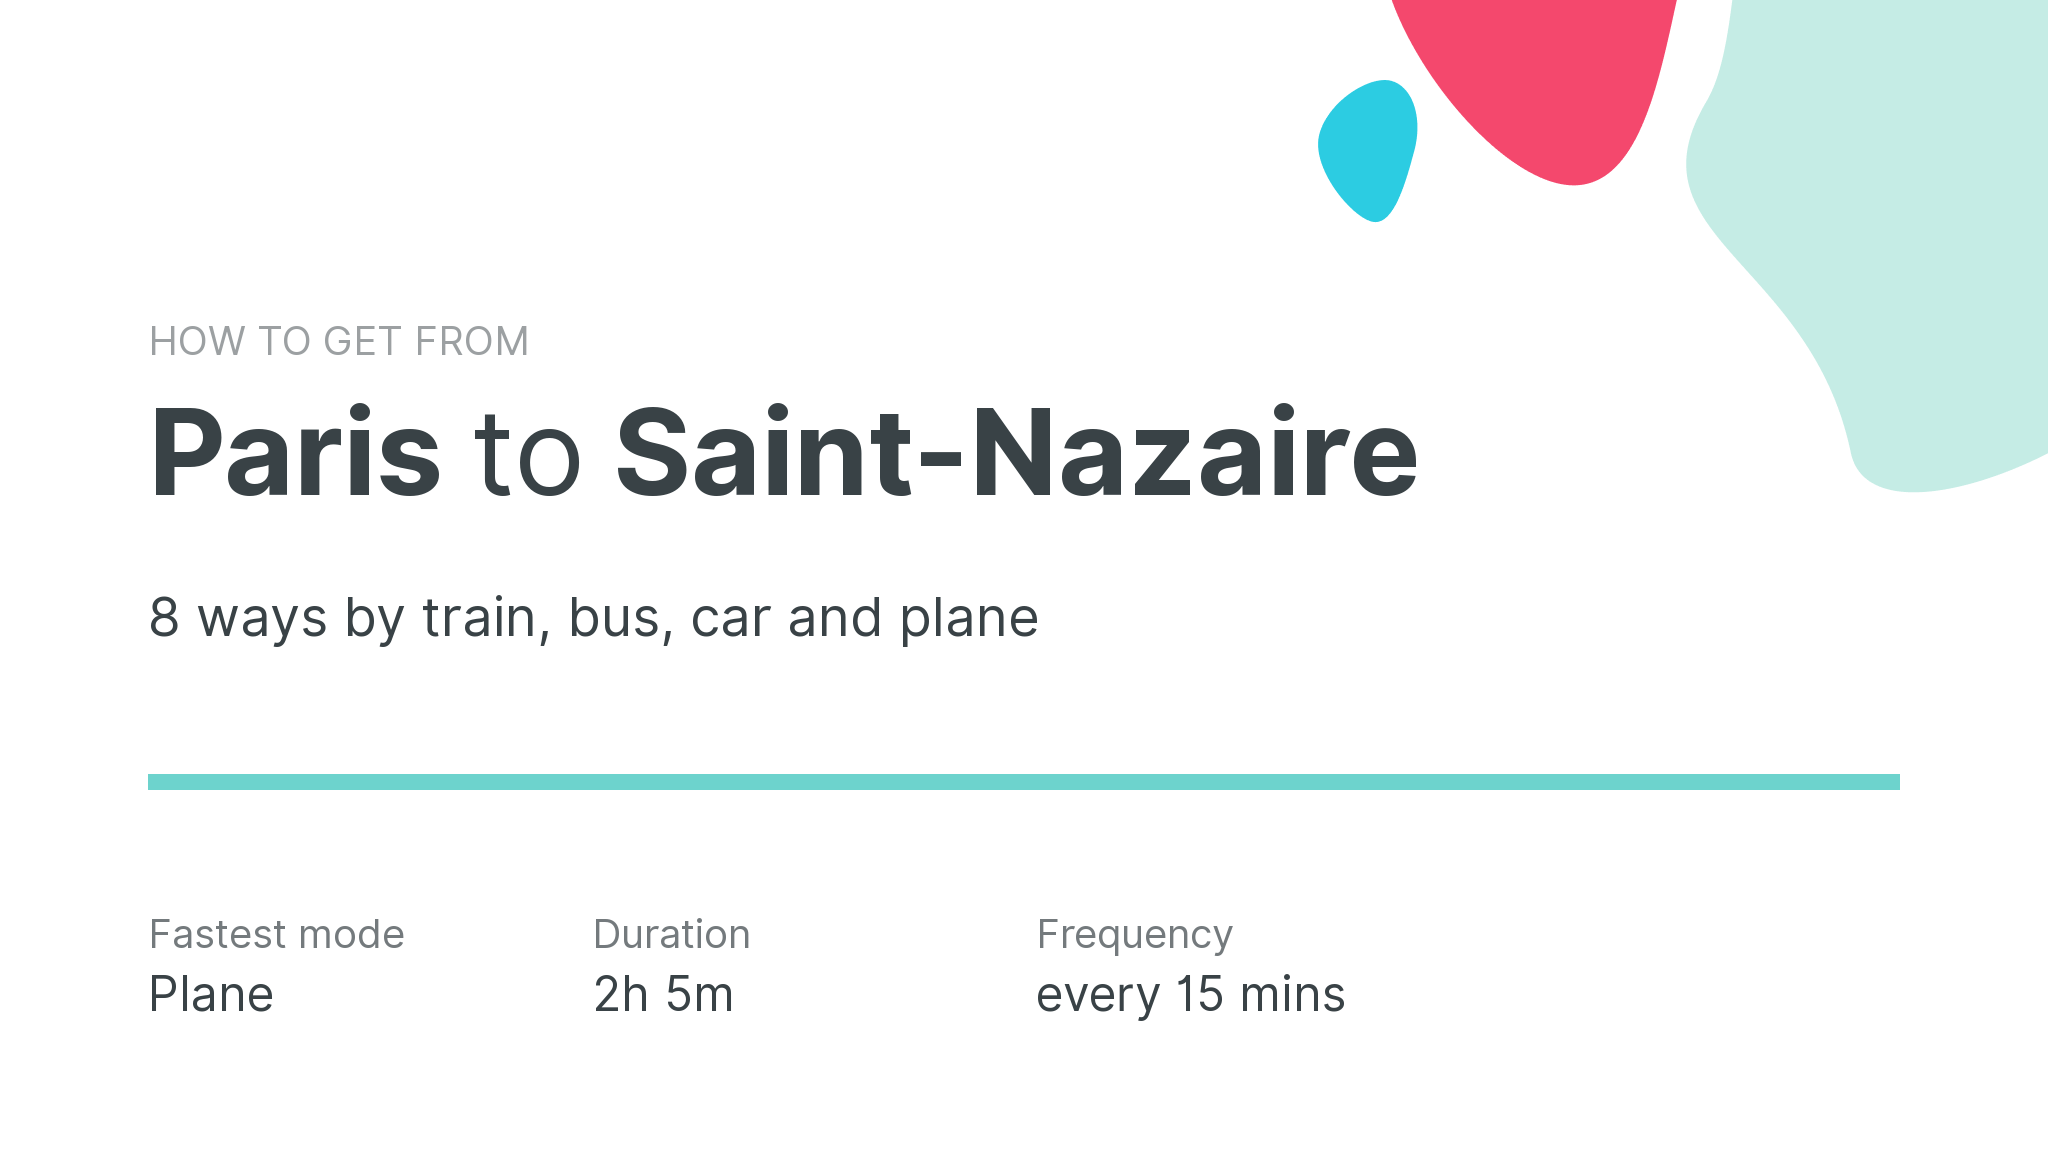 How do I get from Paris to Saint-Nazaire